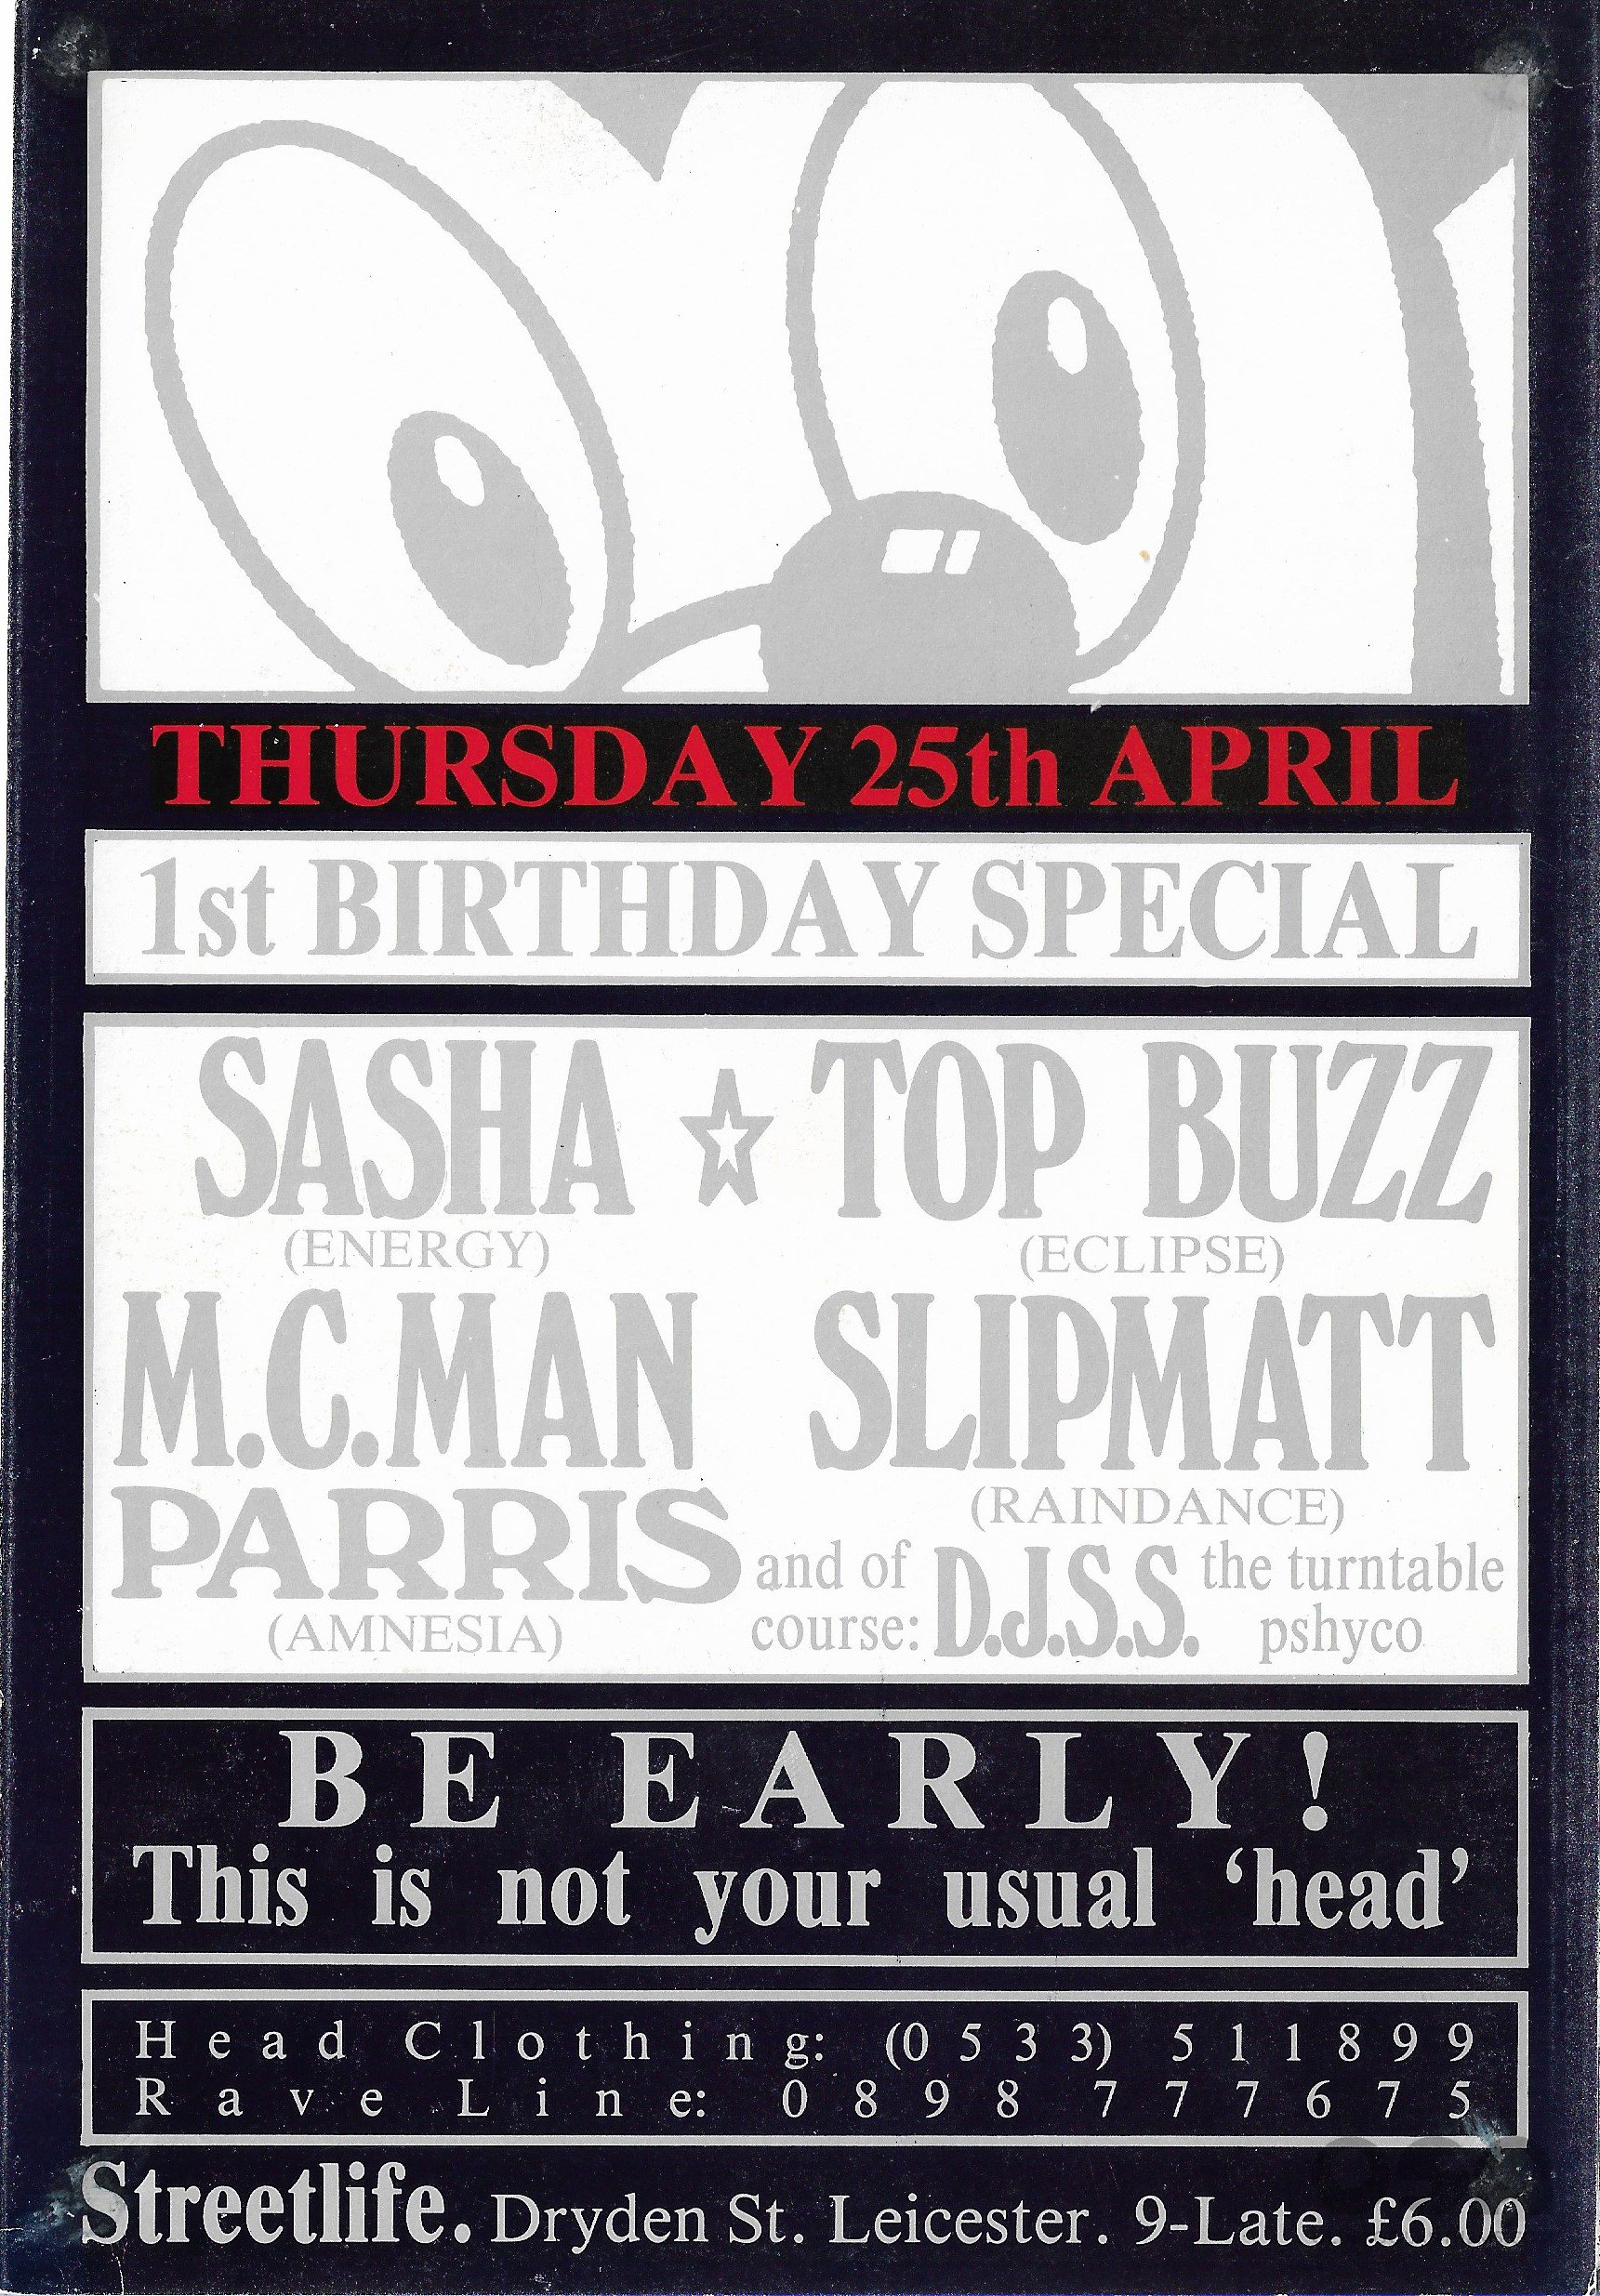 Head - 1st Birthday Special @ Streetlife - Leicester - 25th April 1991 .jpg